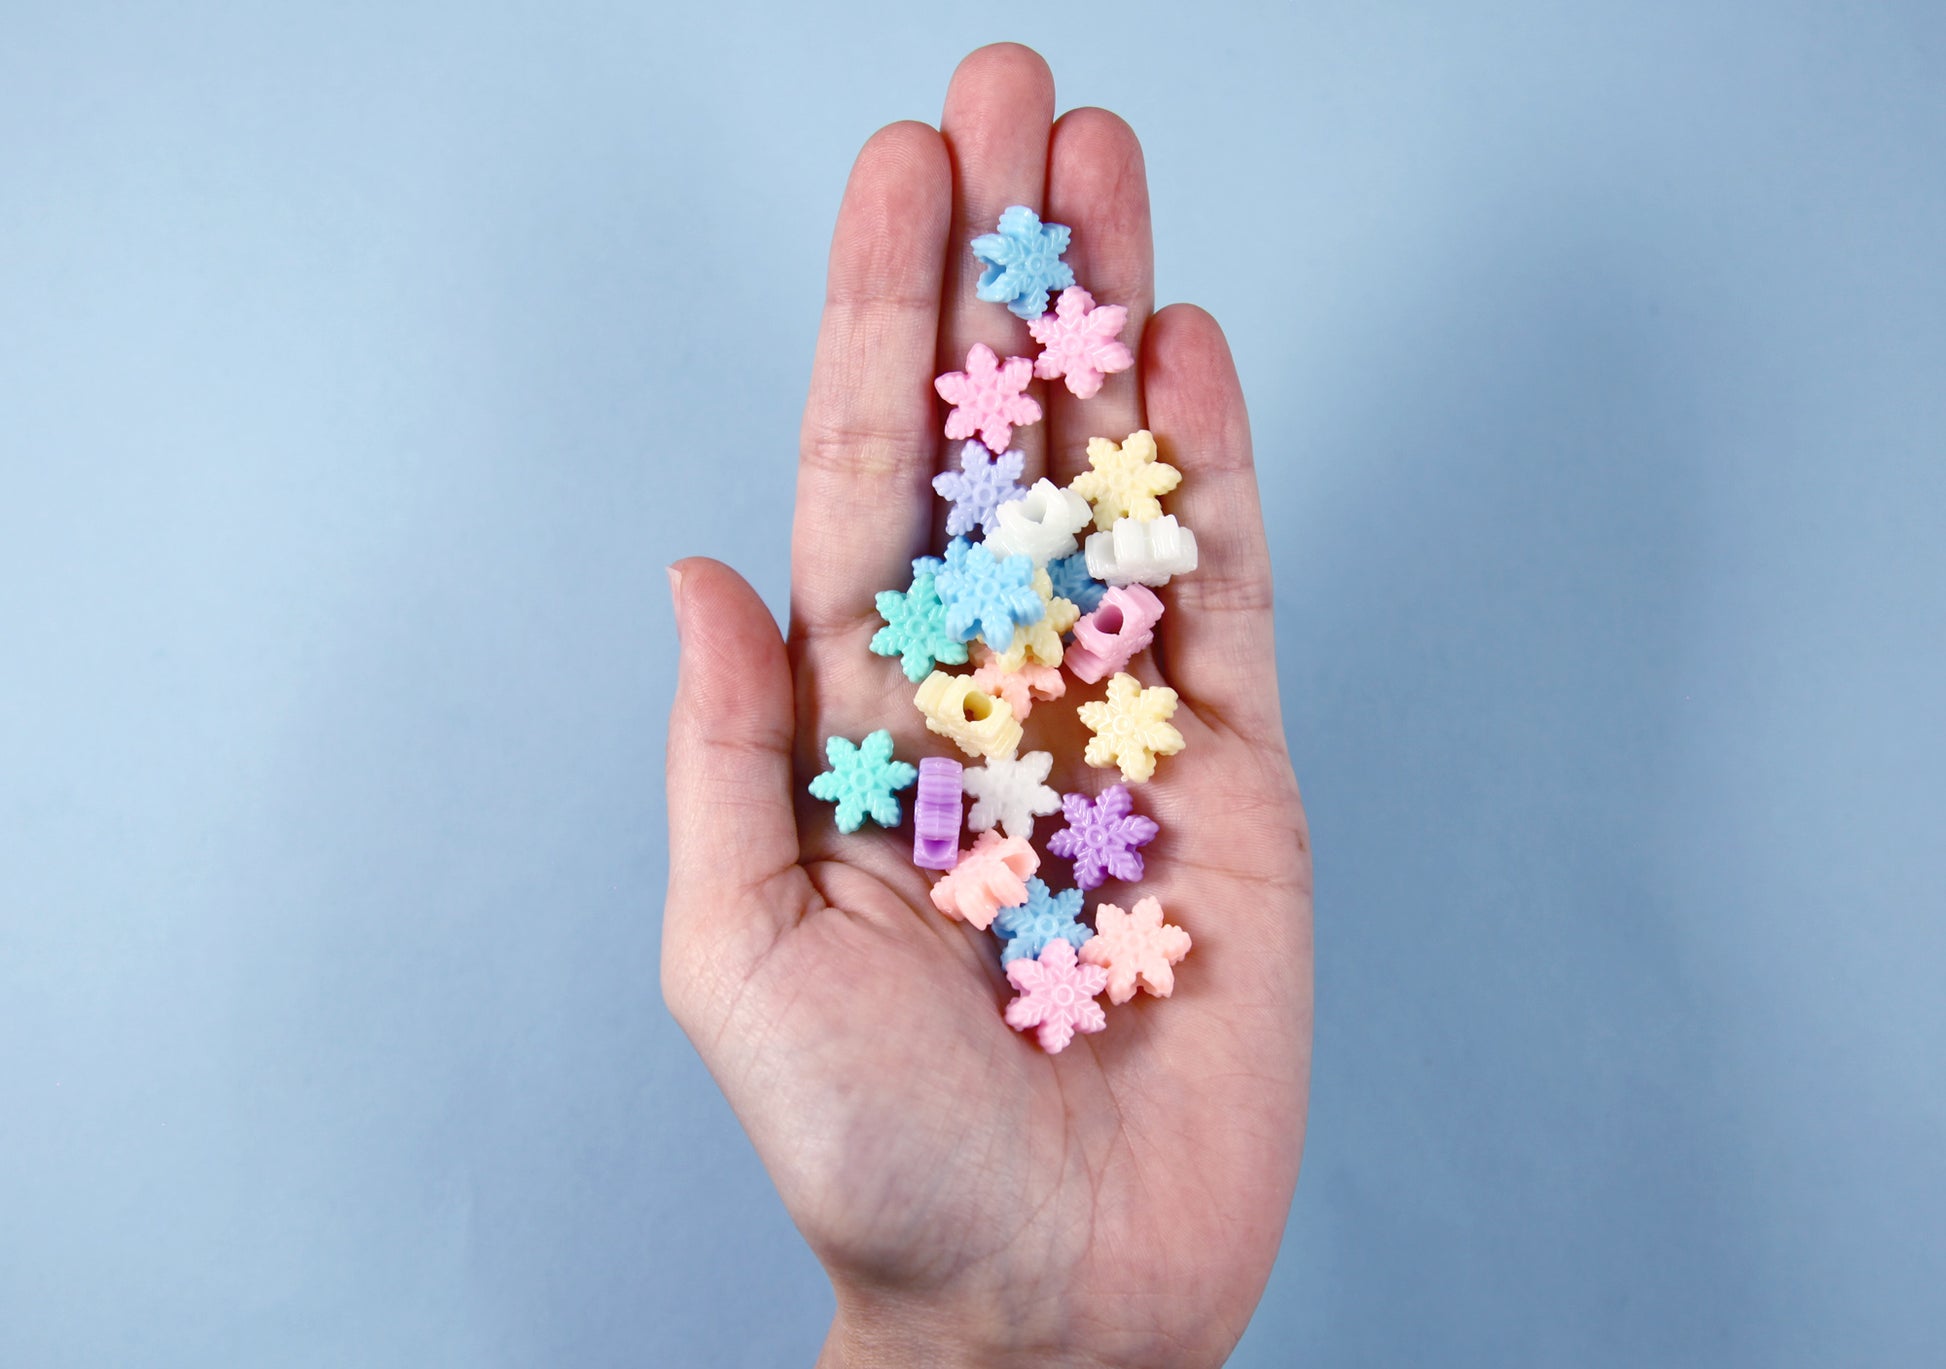 Pastel Beads 6mm Small Pastel Gumball Bubblegum Plastic Acrylic or Resin  Beads 500 Pc Set 